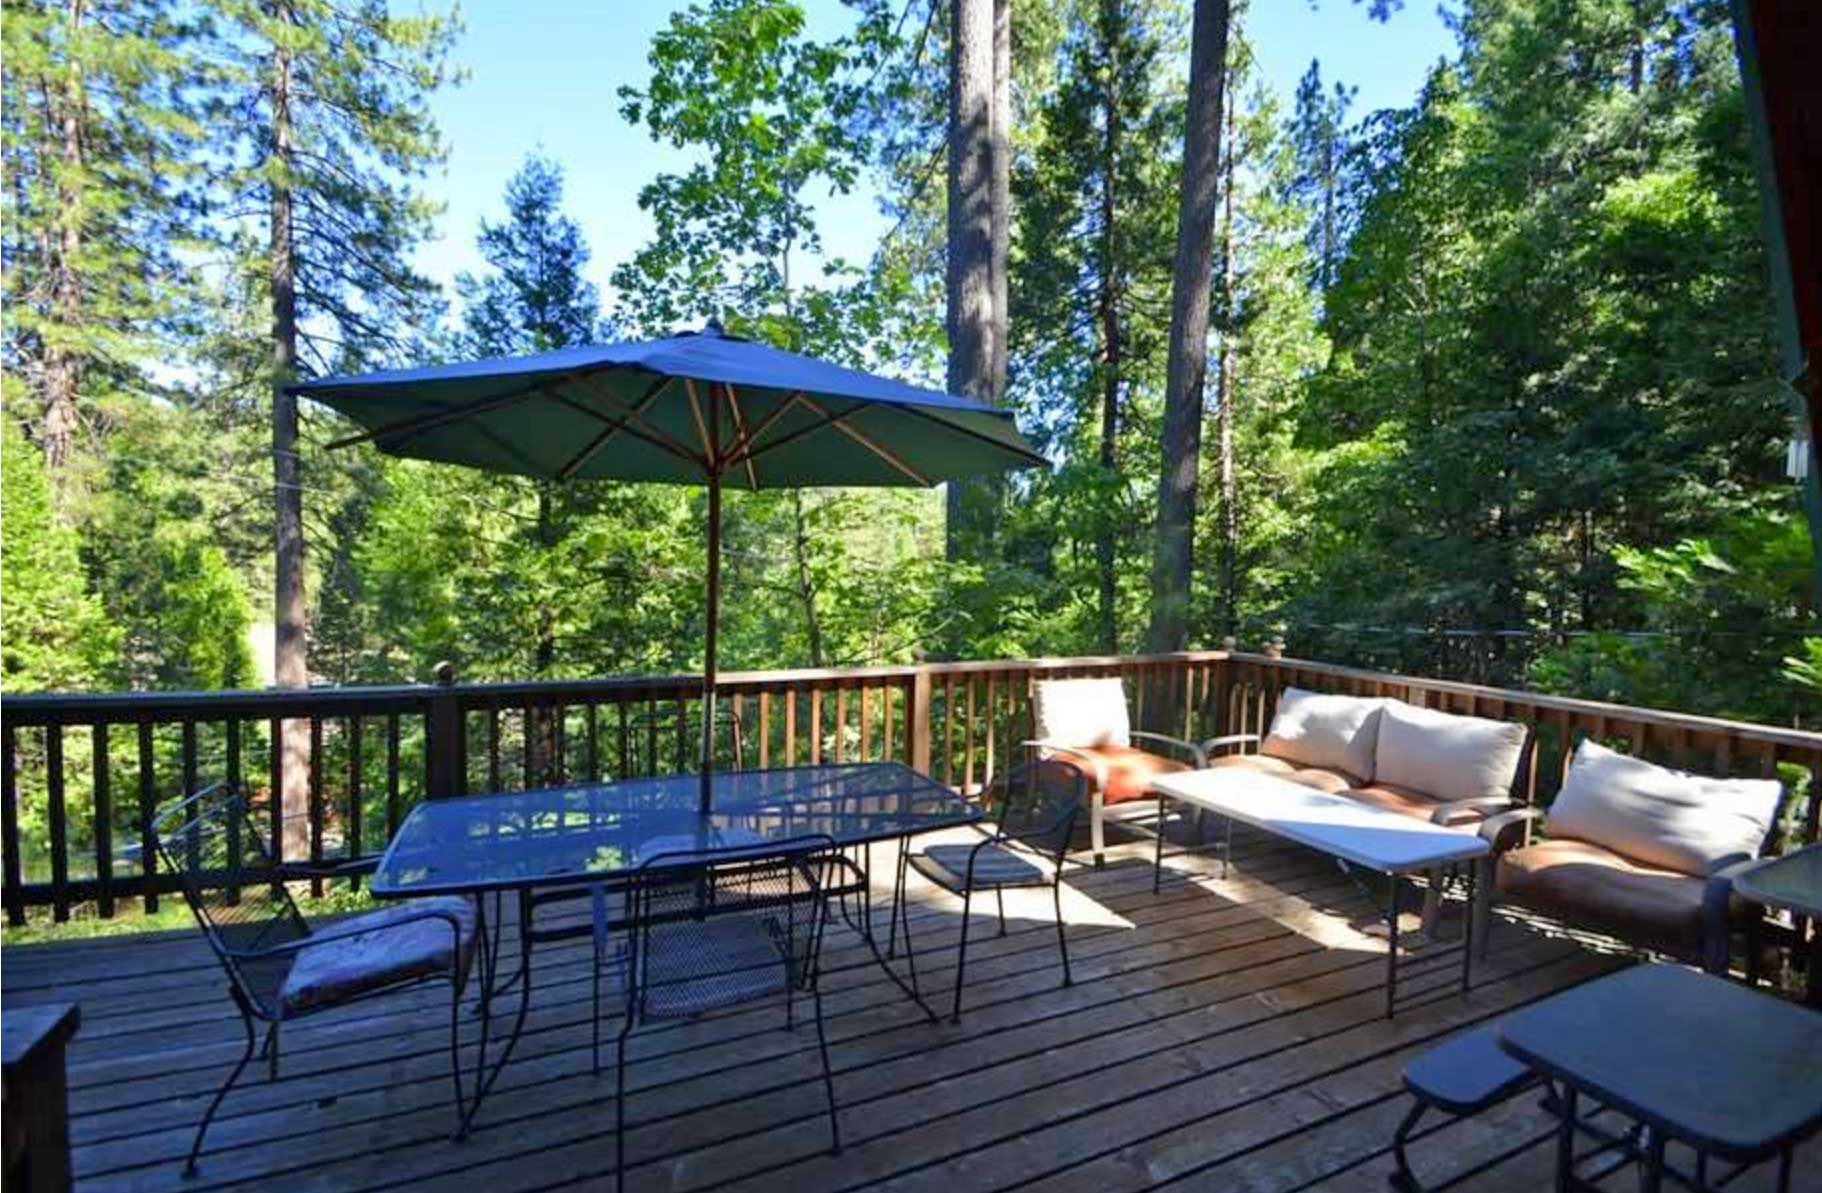 Cedar Creek Cabin Rentals - 90+ vacation properties for High Sierra fun